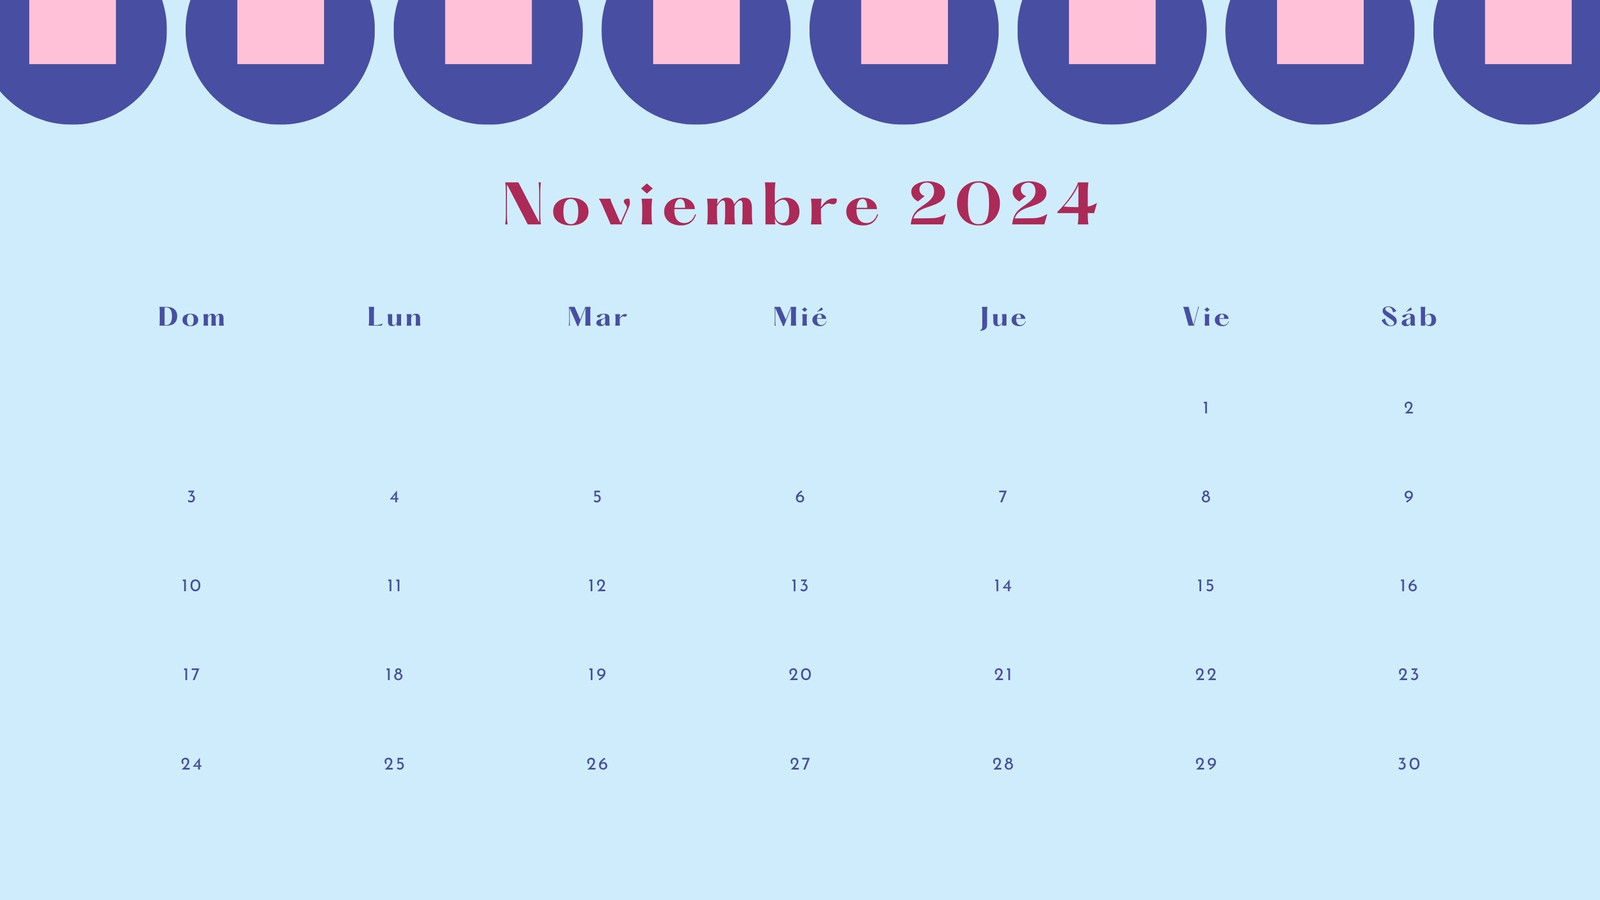 Calendario Mensual en Azul estilo Figuras coloridas